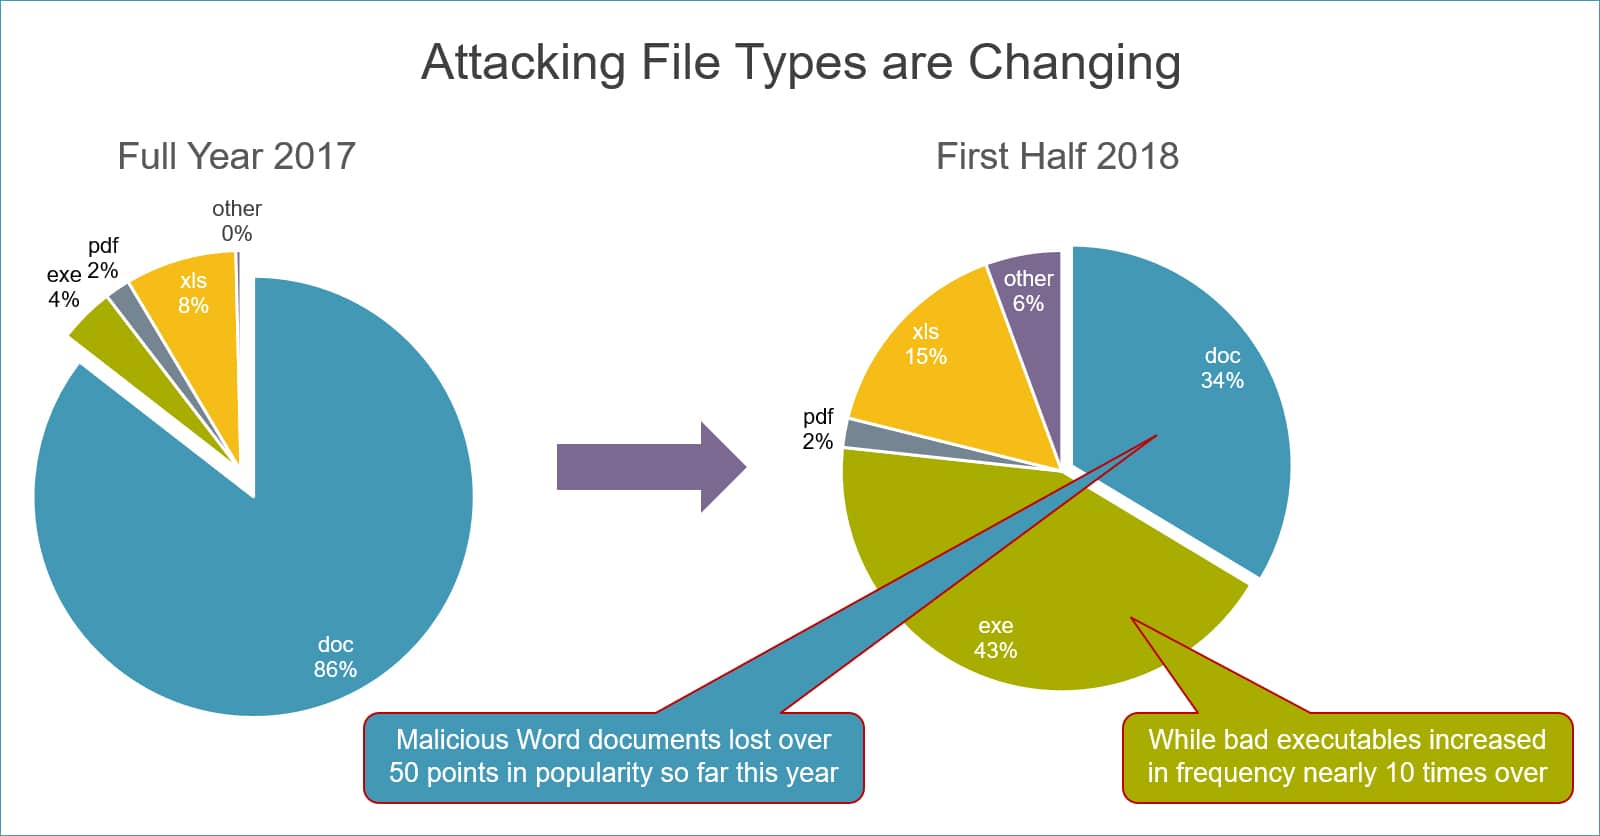 File-based attack